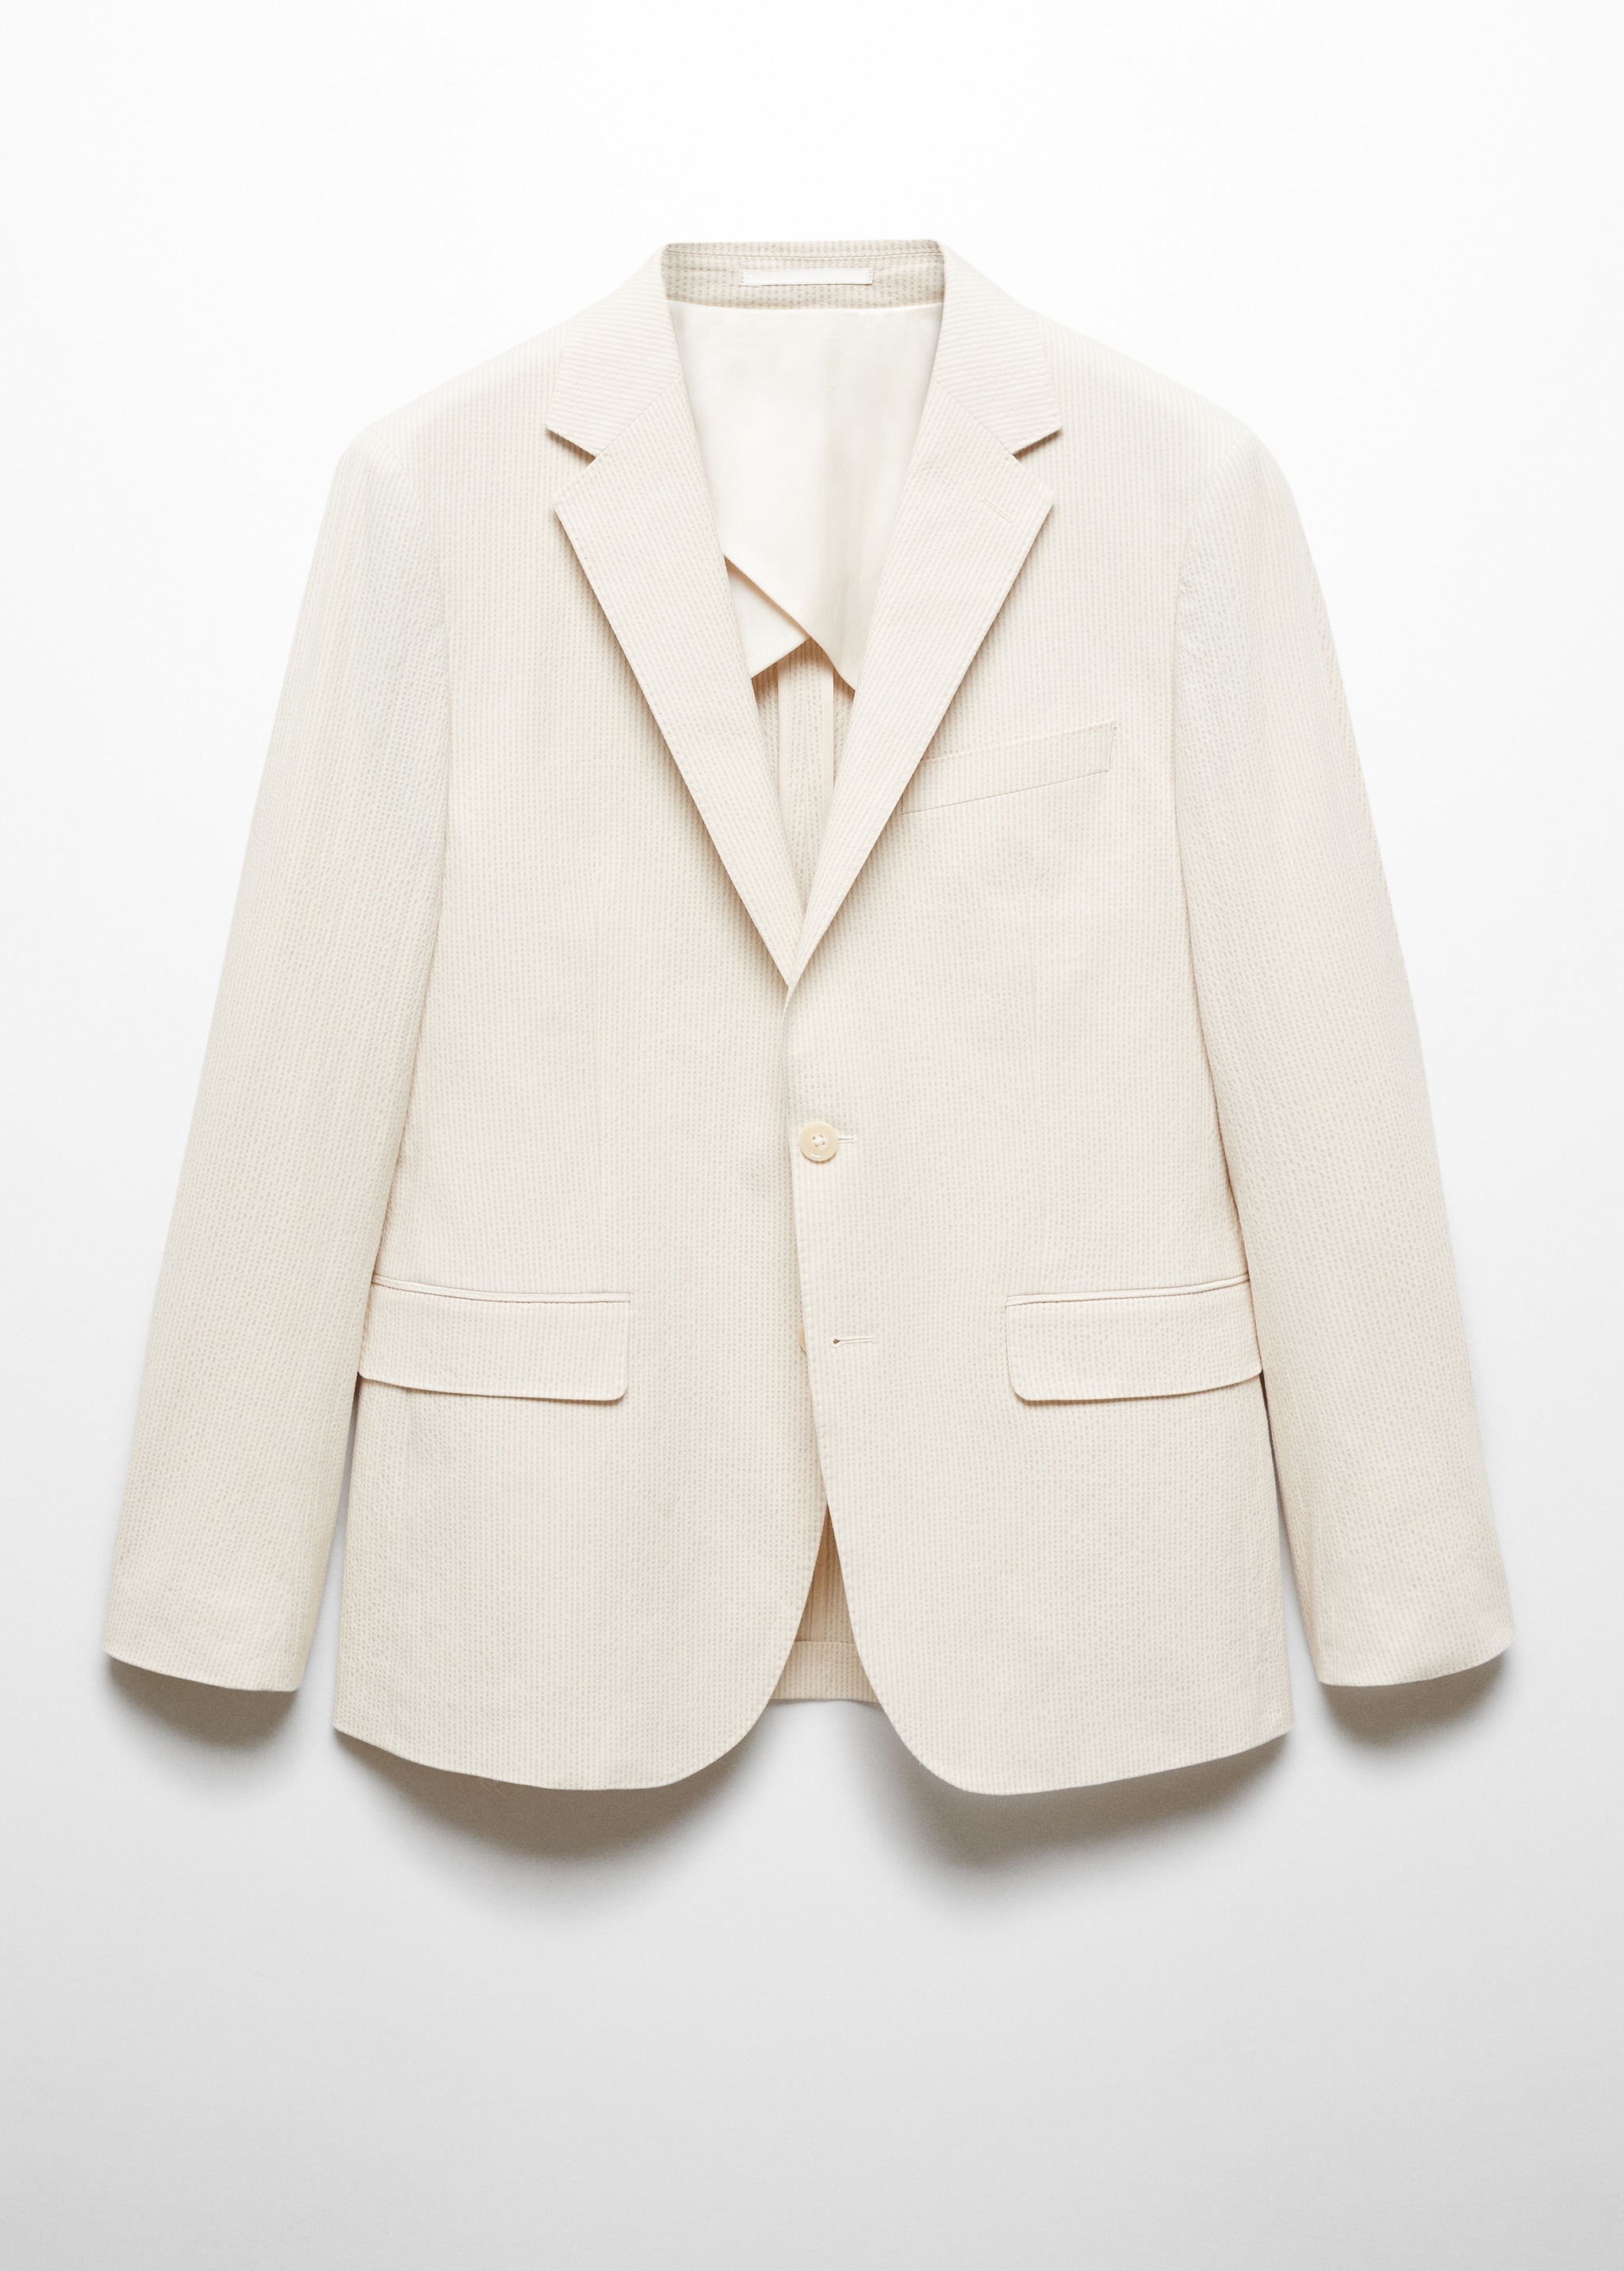 Striped seersucker cotton slim-fit suit jacket - Article without model